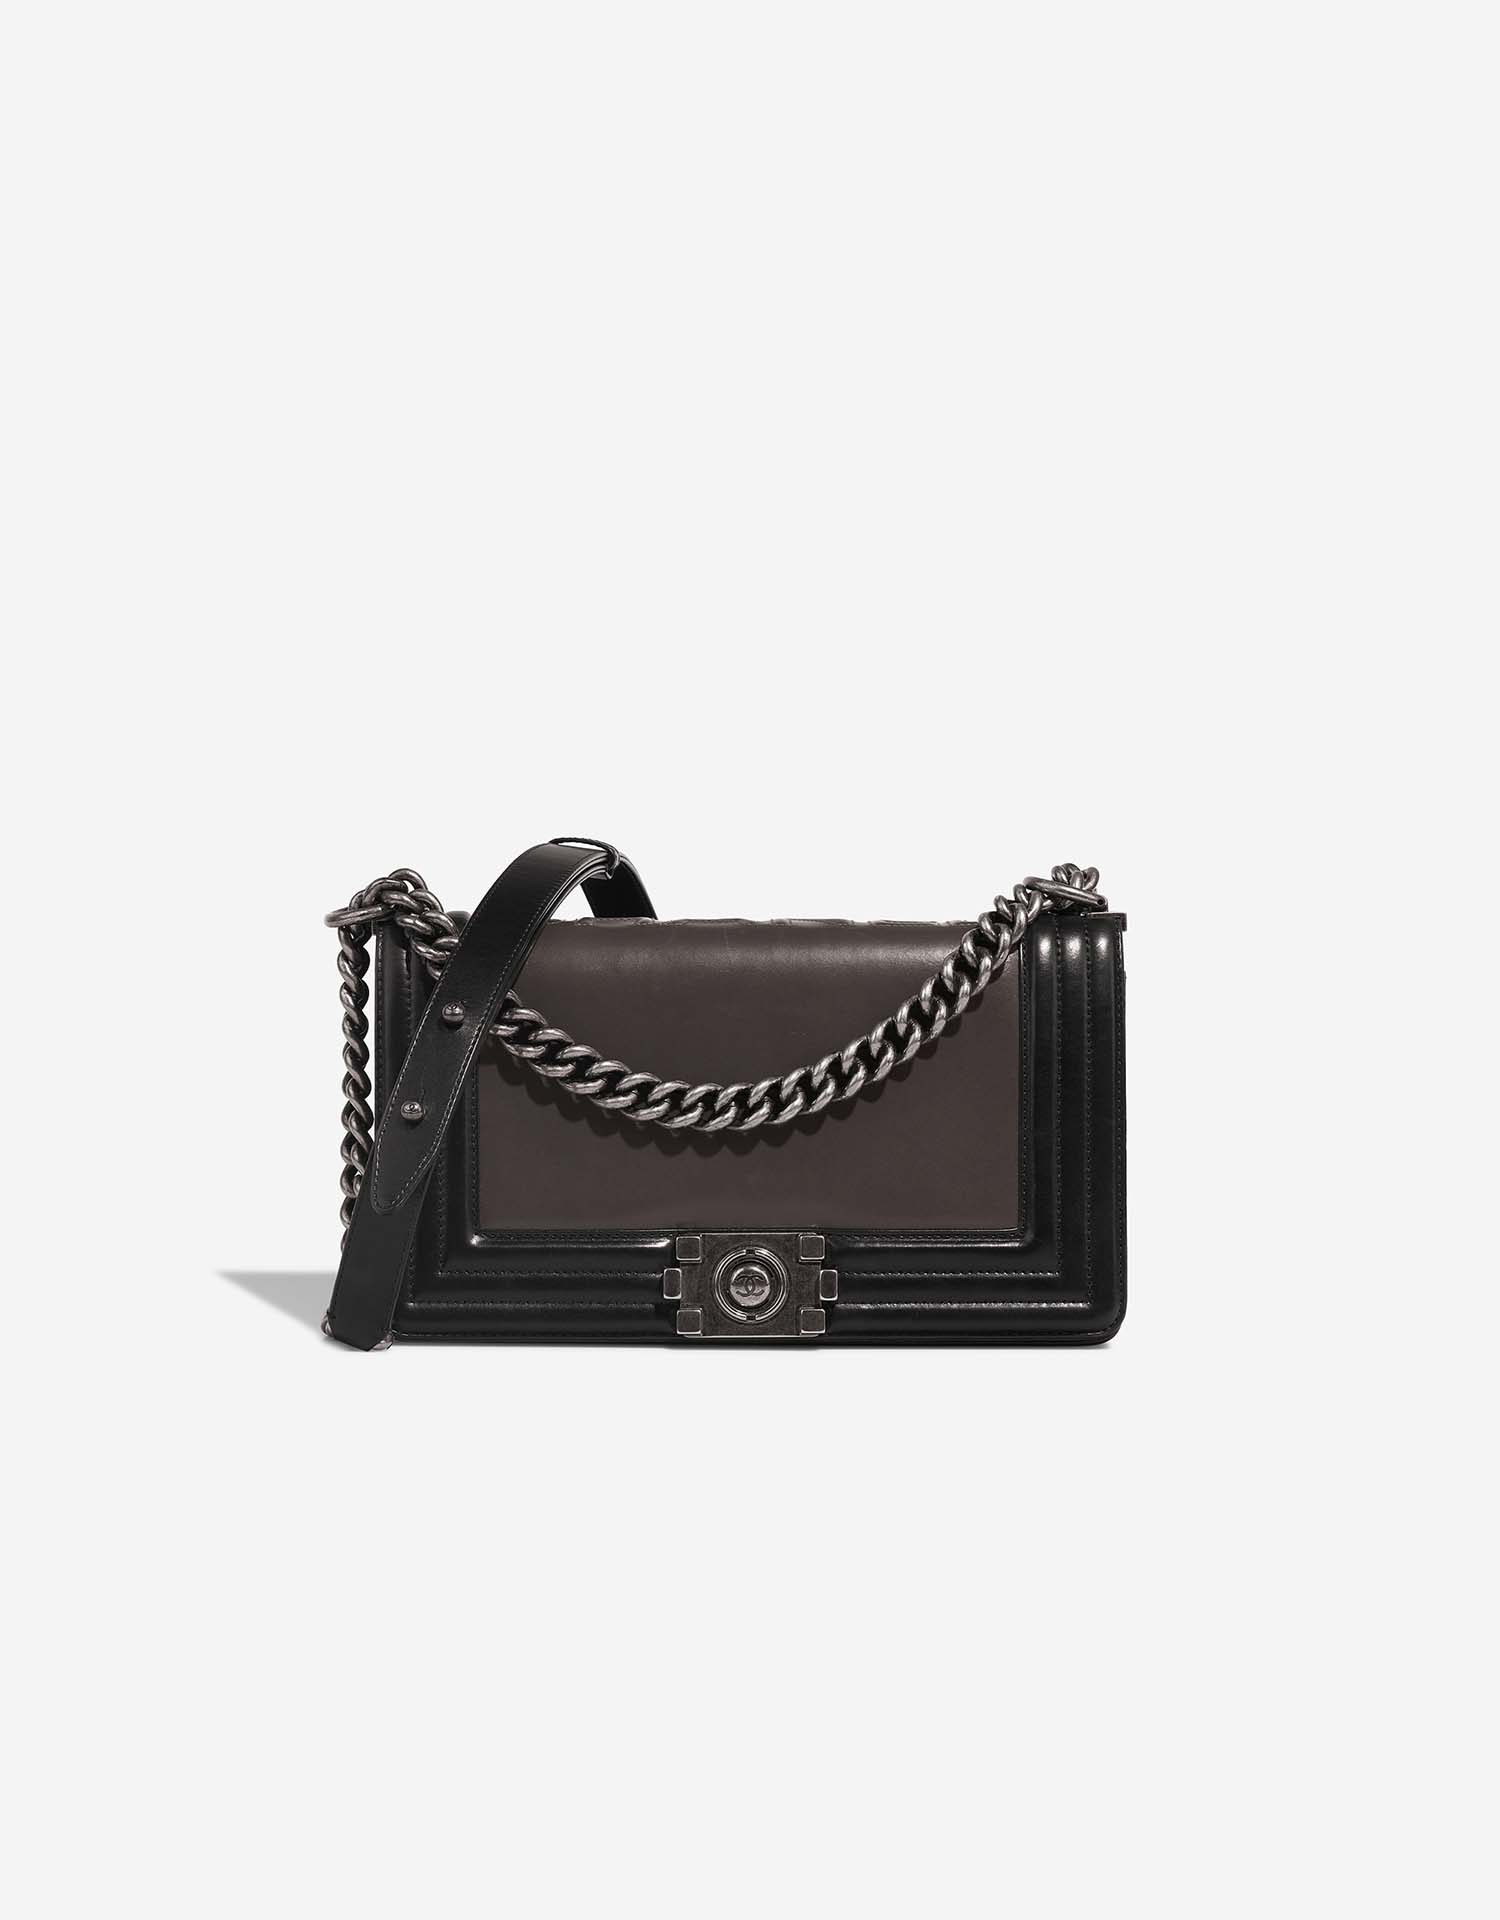 SOLD) genuine pre-owned Chanel vintage satin mini camera bag